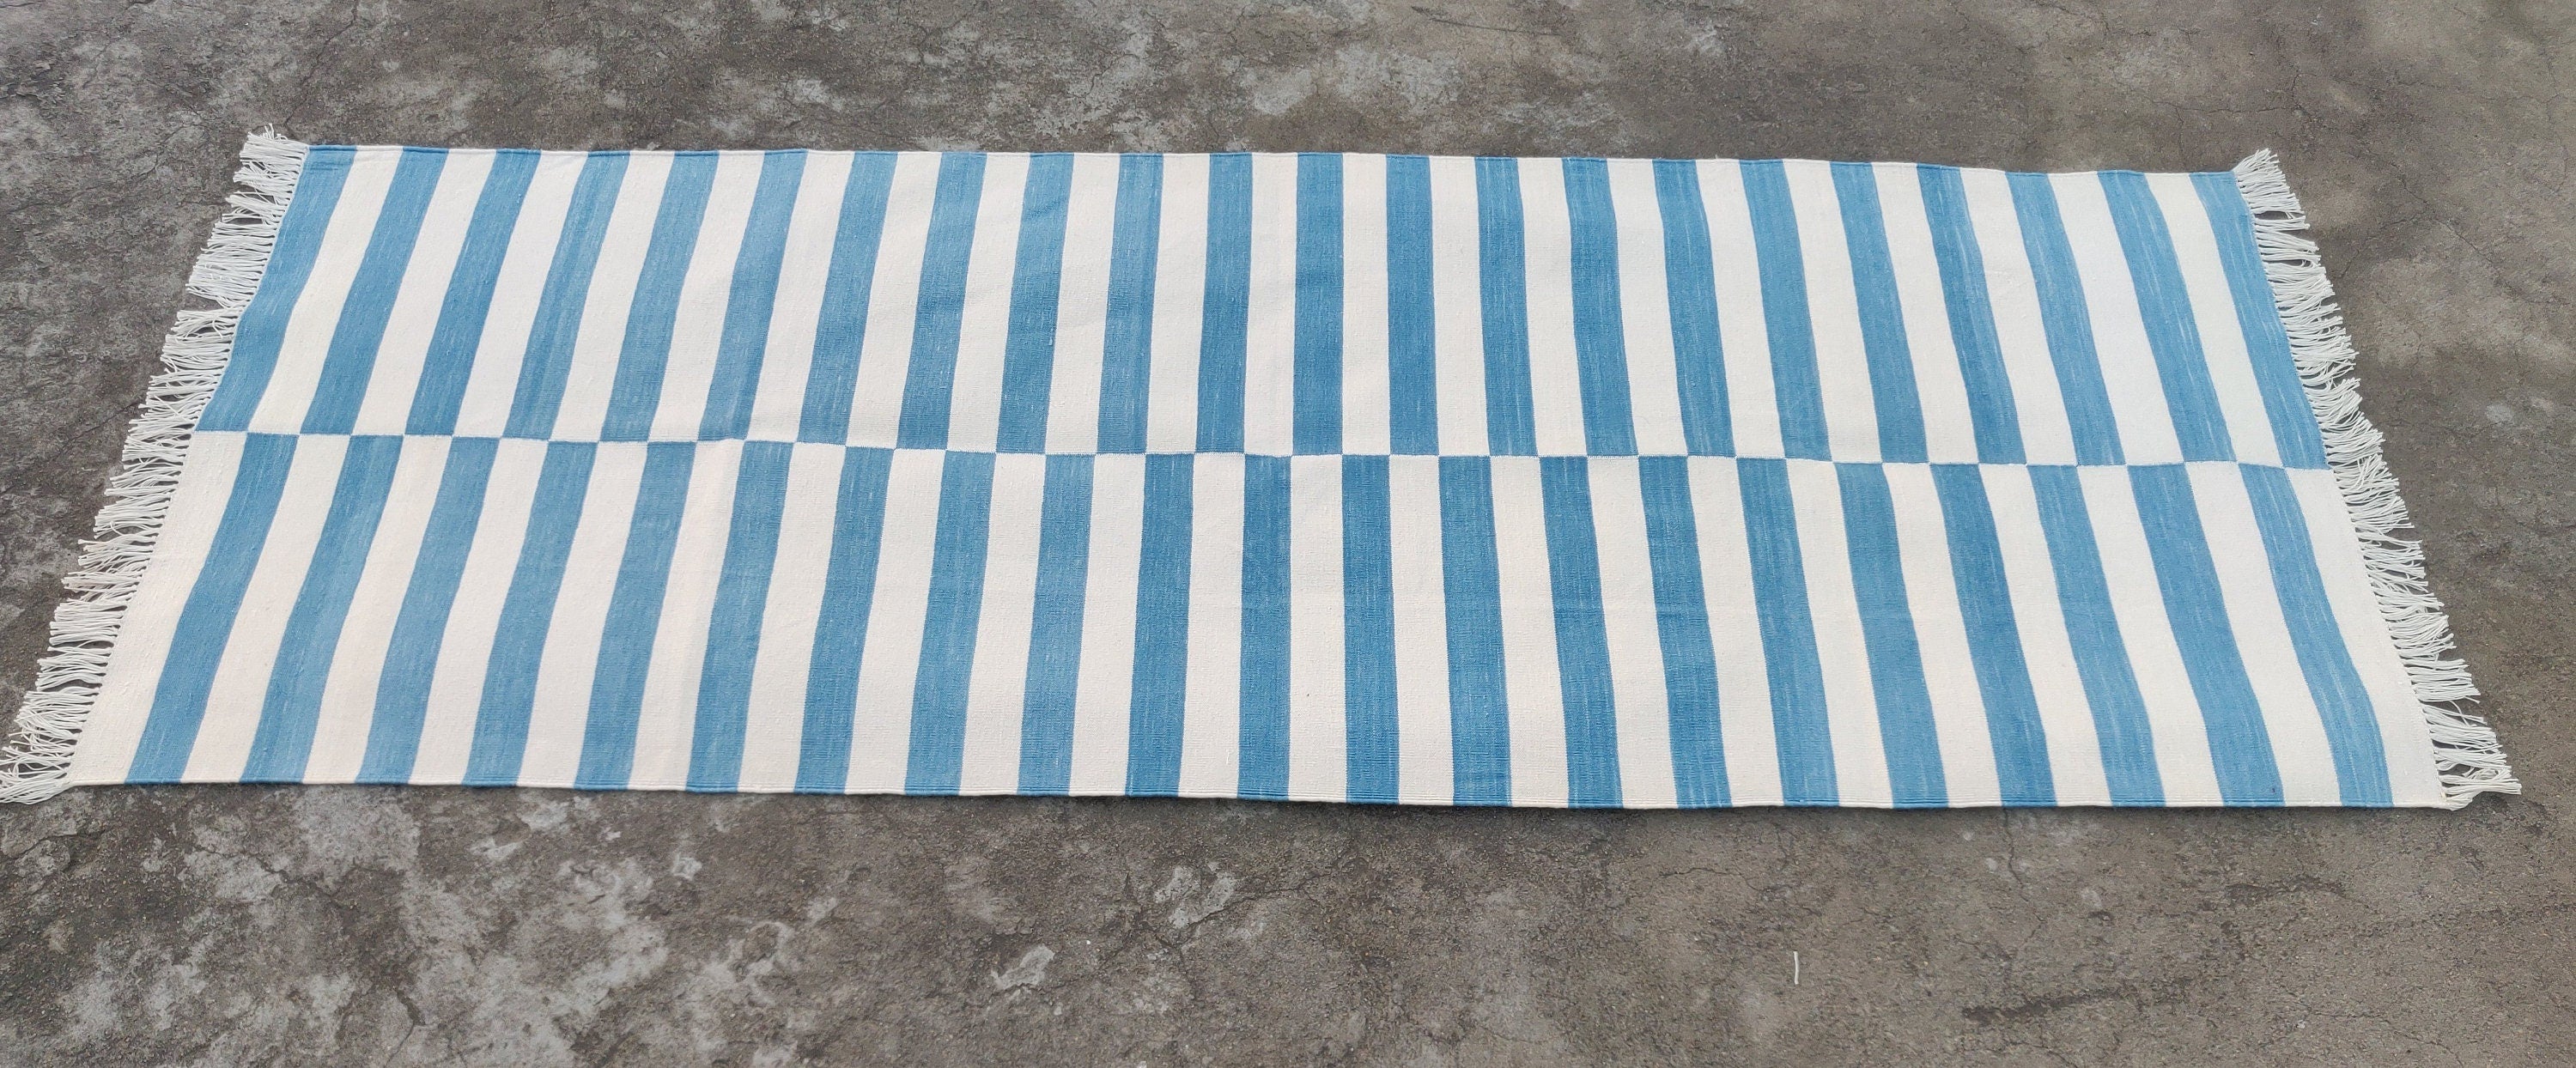 Modern Handmade Cotton Flat Weave  Blue And White Striped Runner